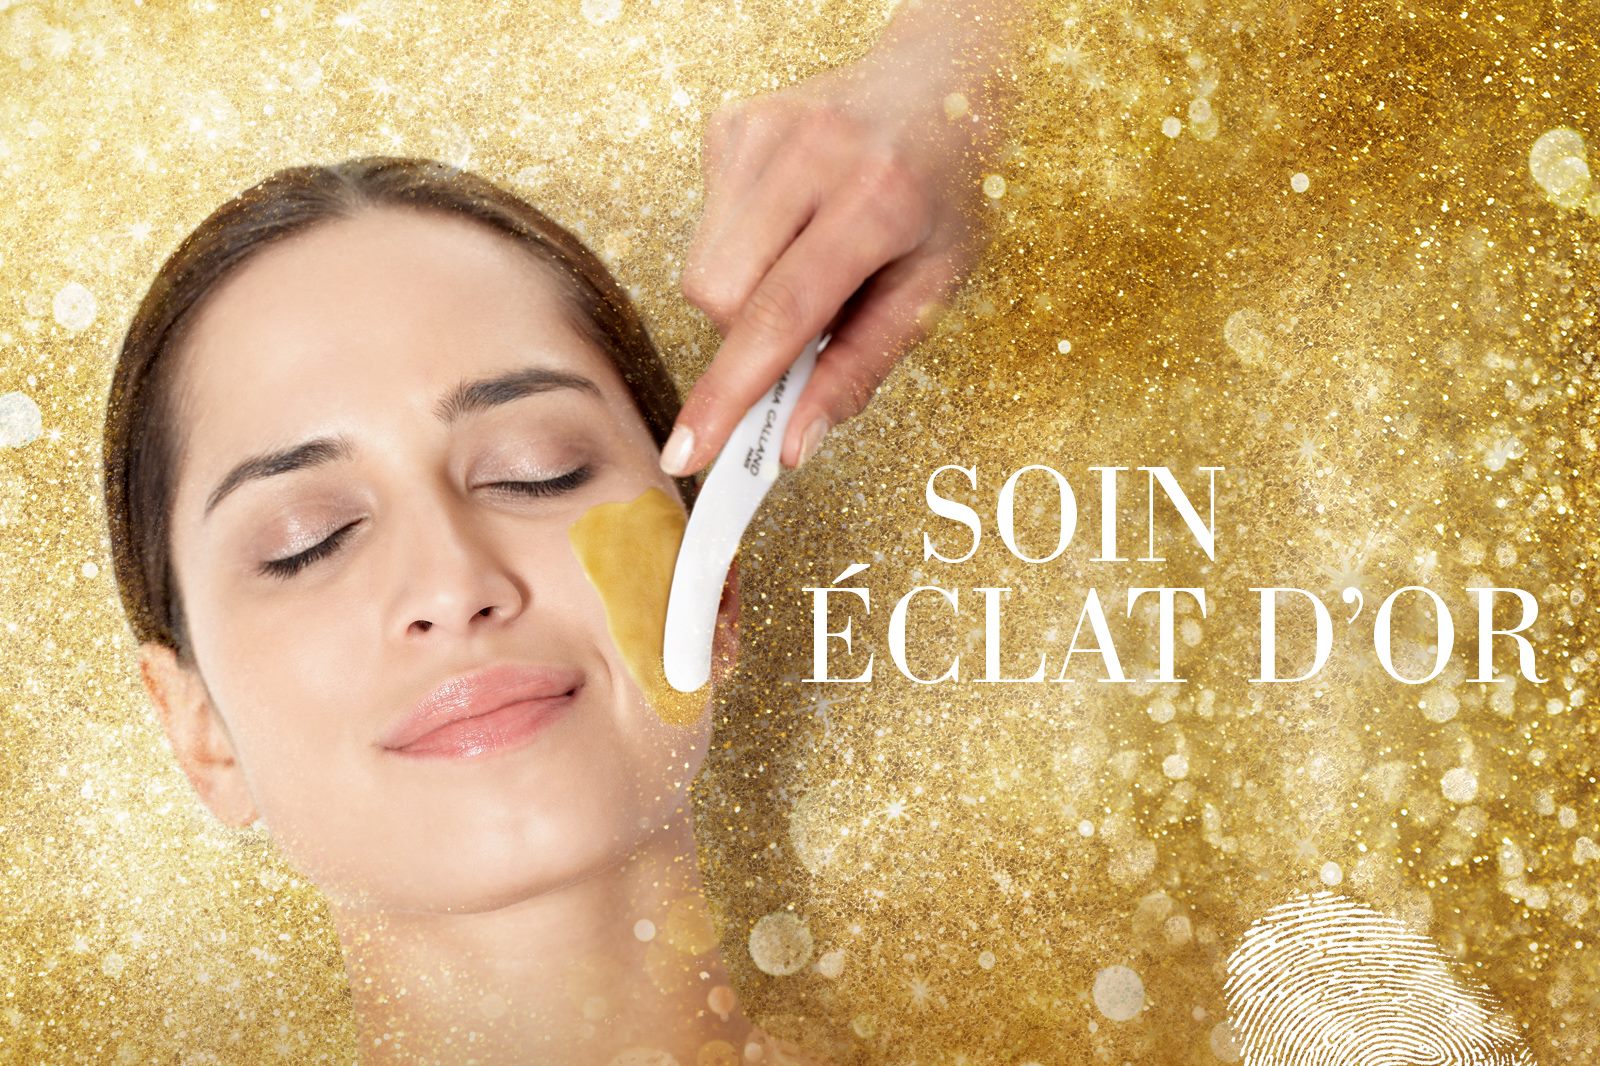 Soin Éclat D'or María Galland - Tratamiento facial con oro